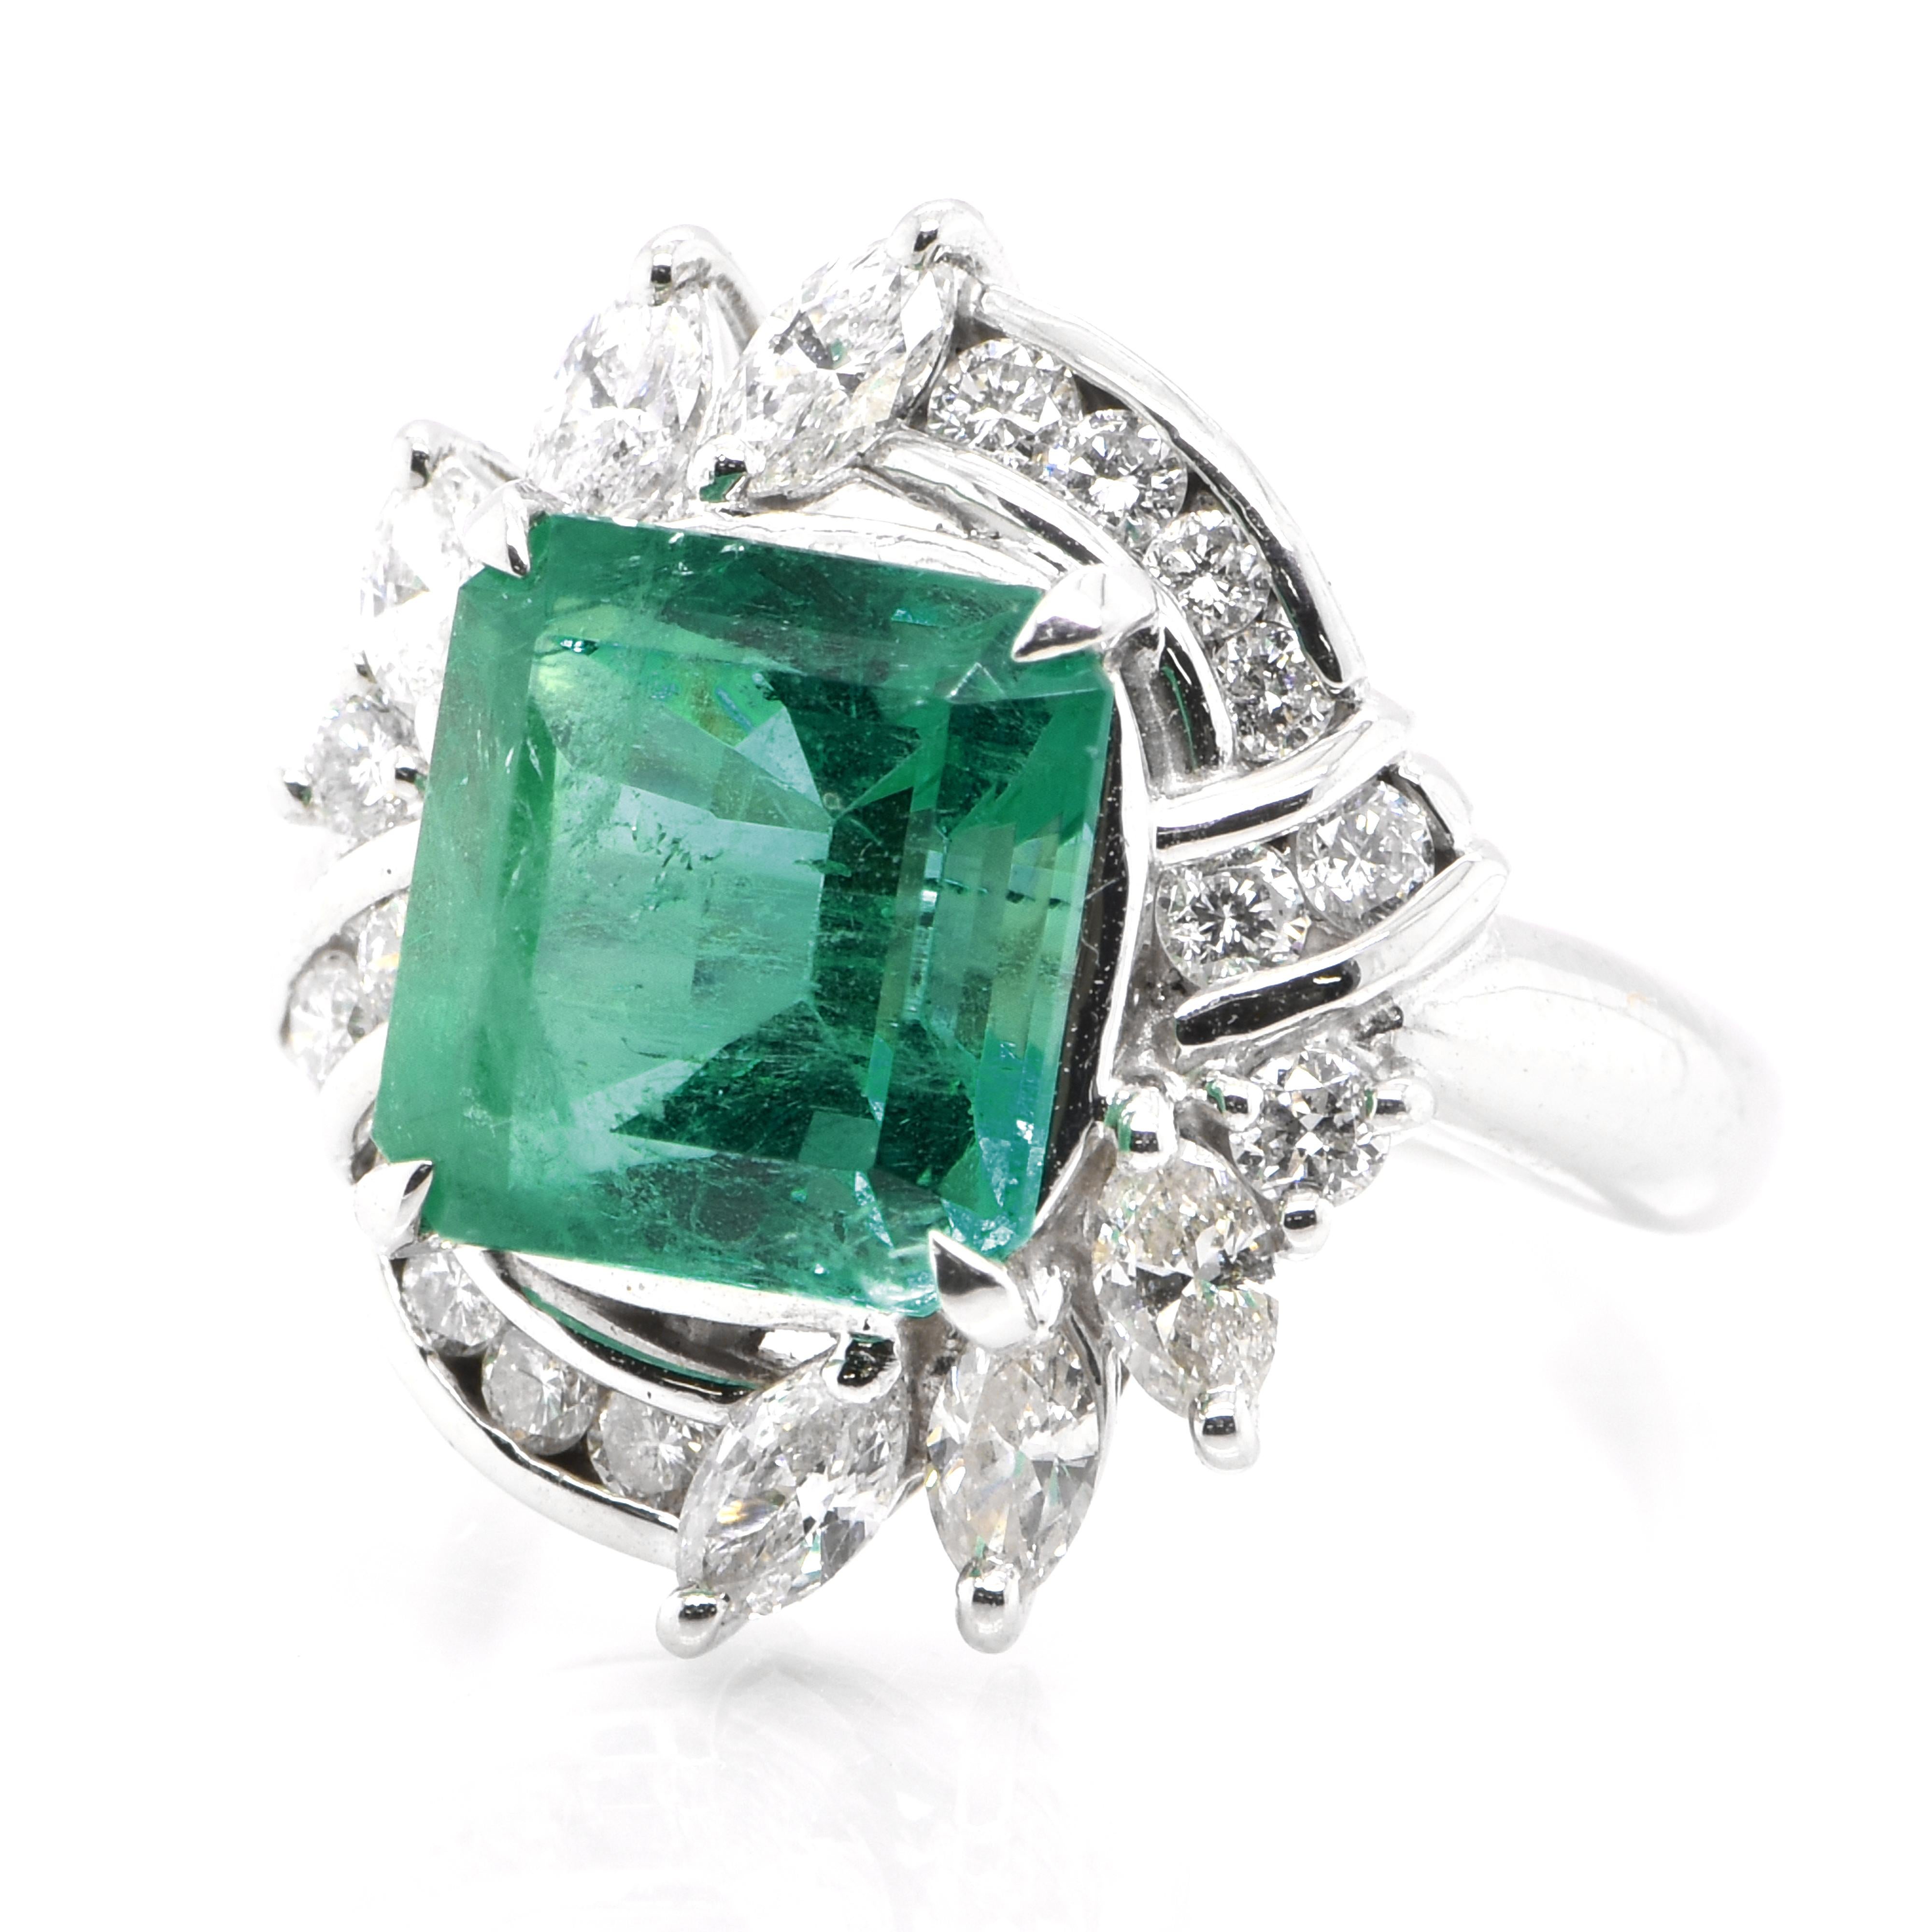 Modern 3.41 Carat Natural Emerald and Diamond Estate Ring Set in Platinum